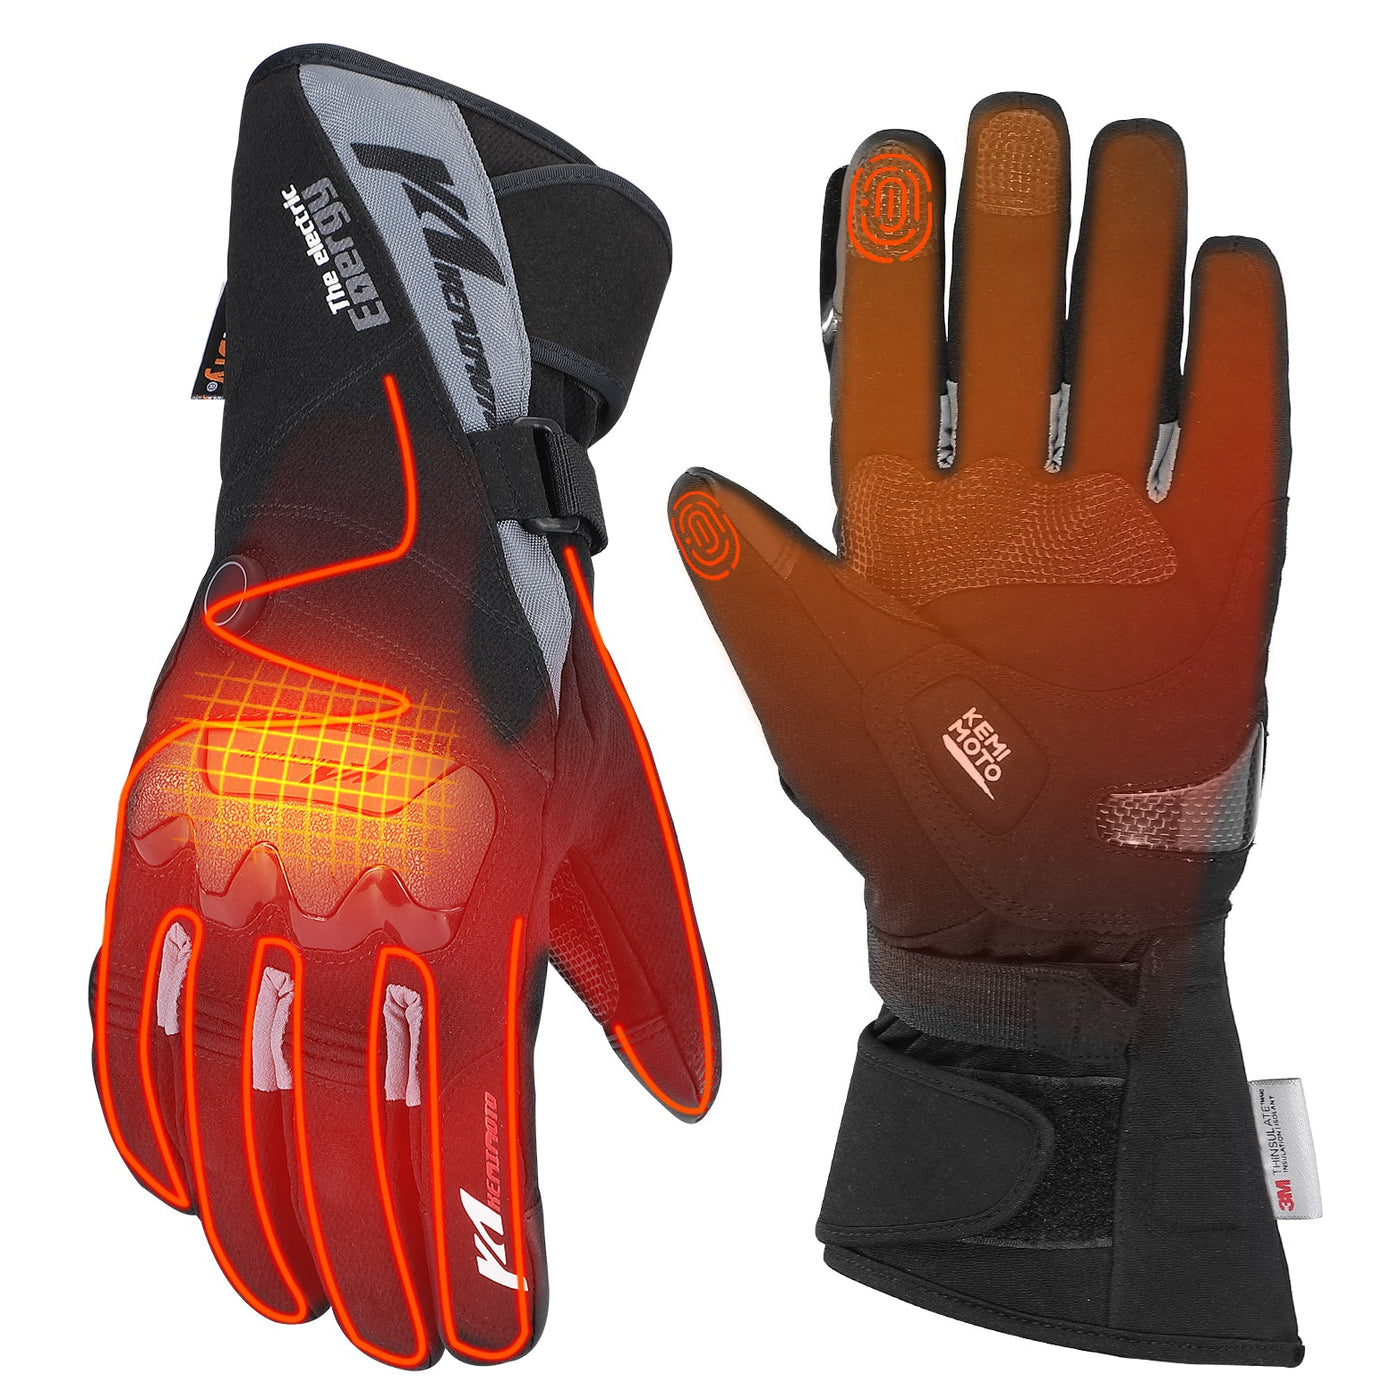 Heated Gloves Waterproof Touchscreen 7.4V 2500mAh